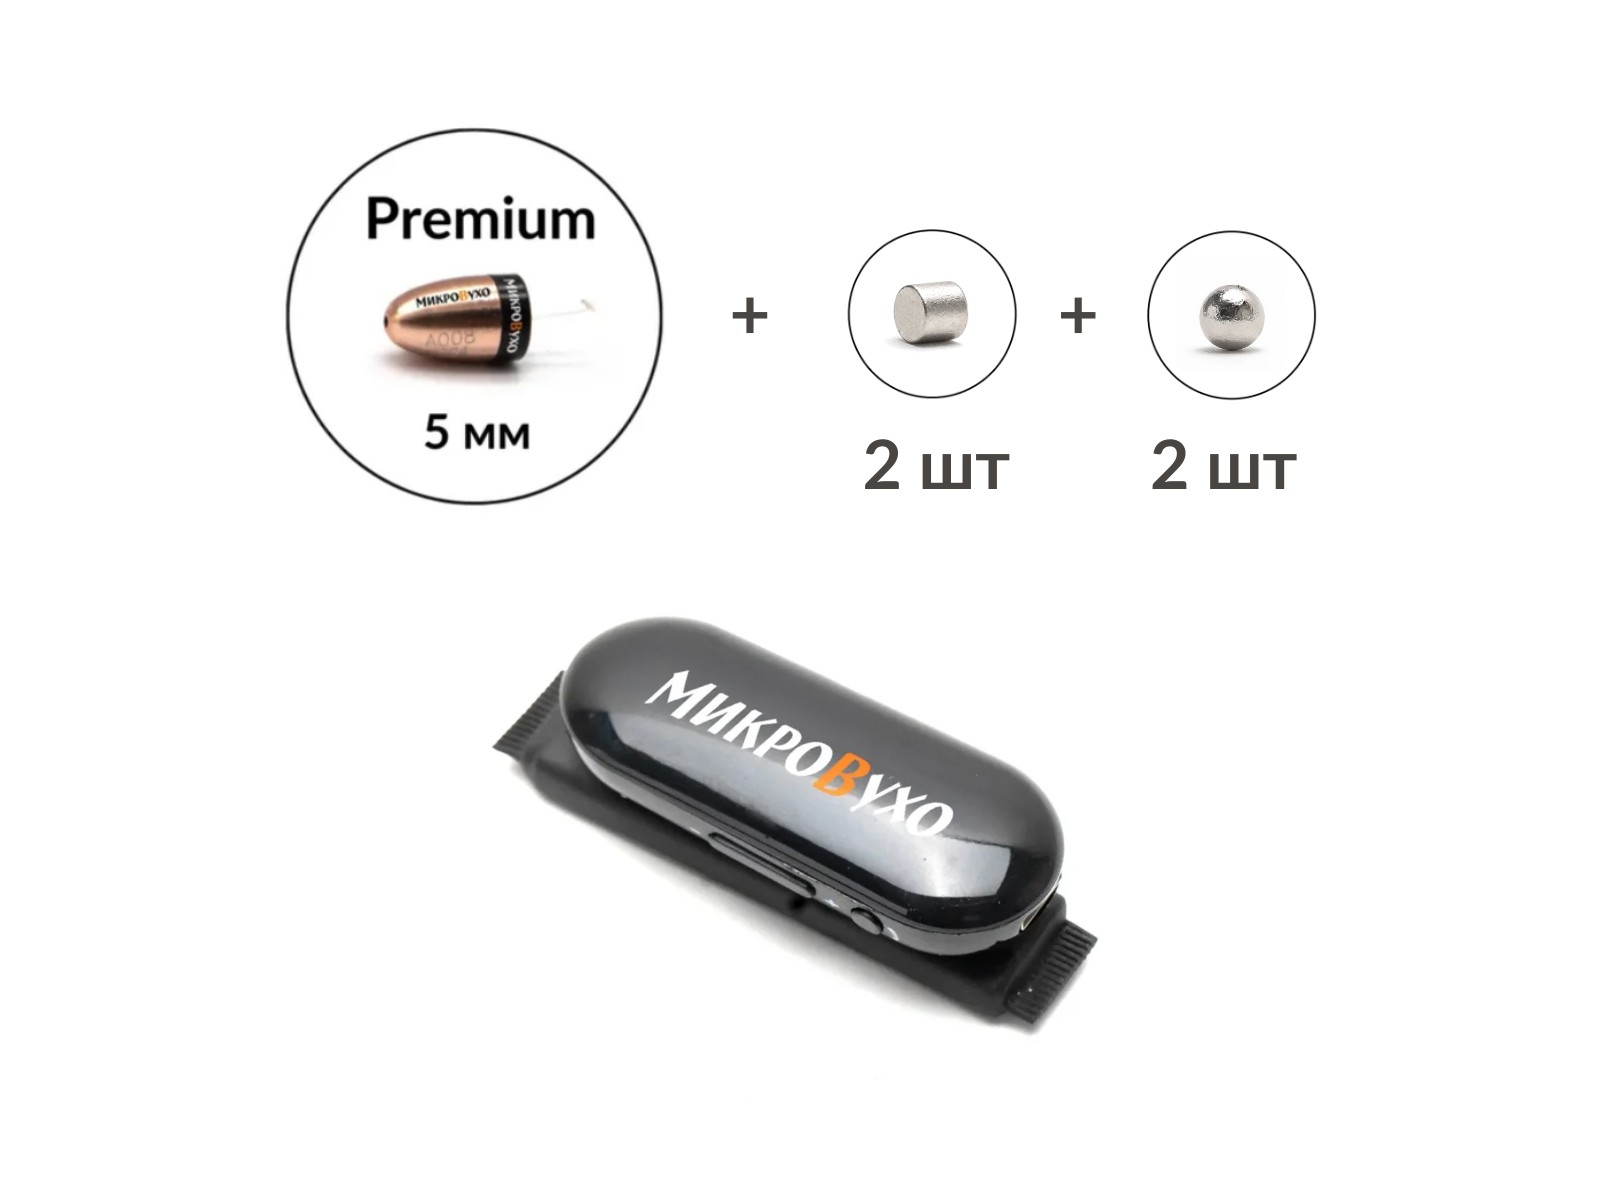 Аренда микронаушника Bluetooth Box Pro Plus с капсулой Premium и магнитами 2 мм 1